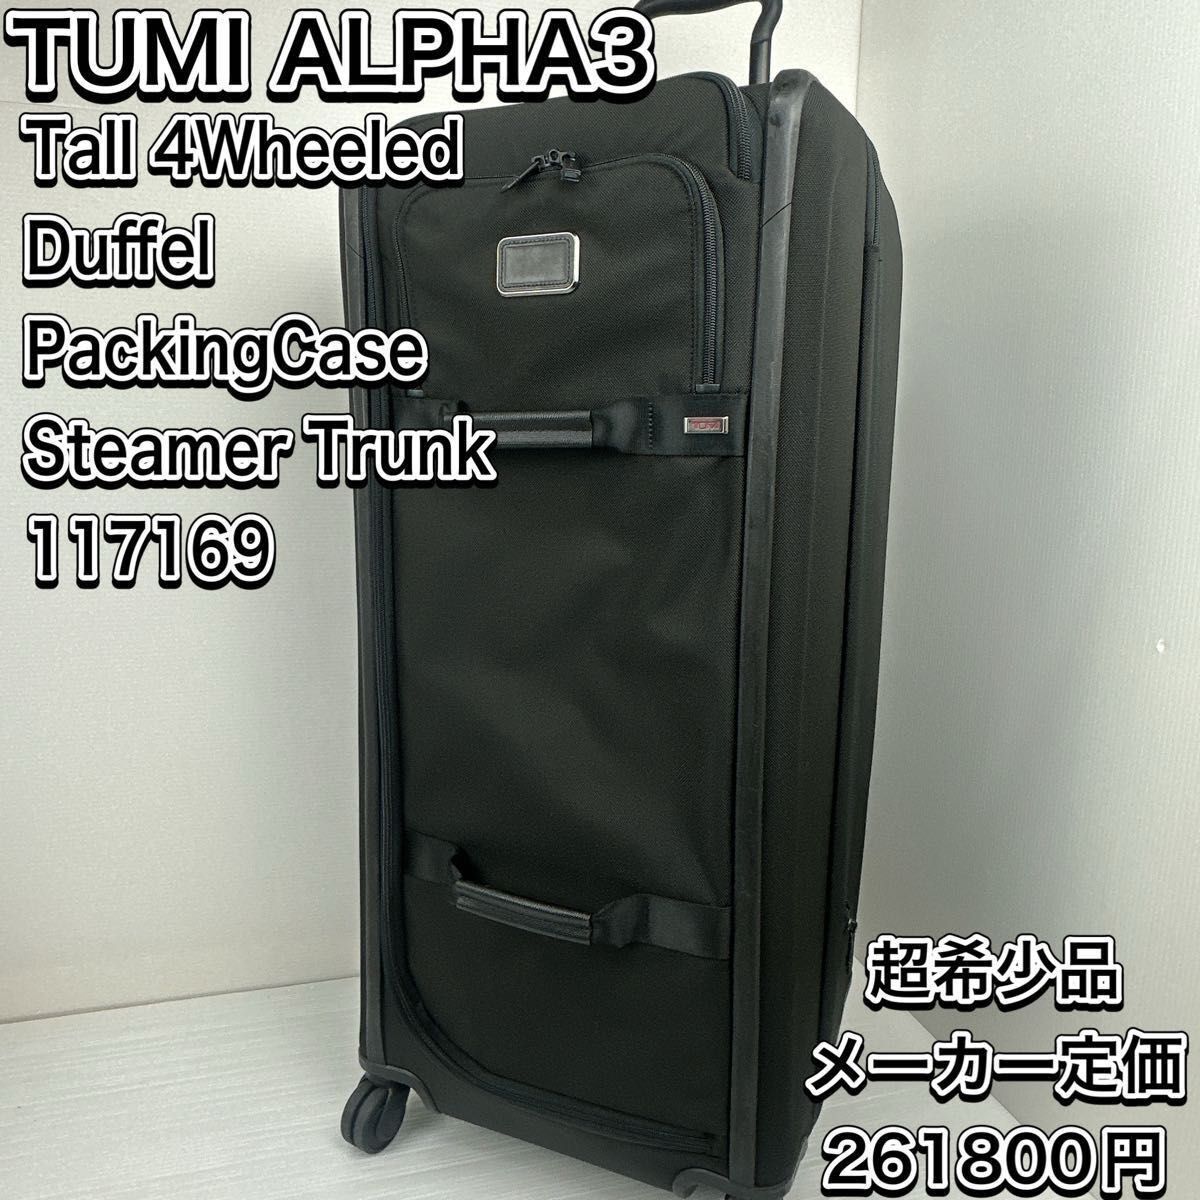  rare ultimate beautiful goods TUMI Tumi tall *4 Wheel *da full * packing * case 